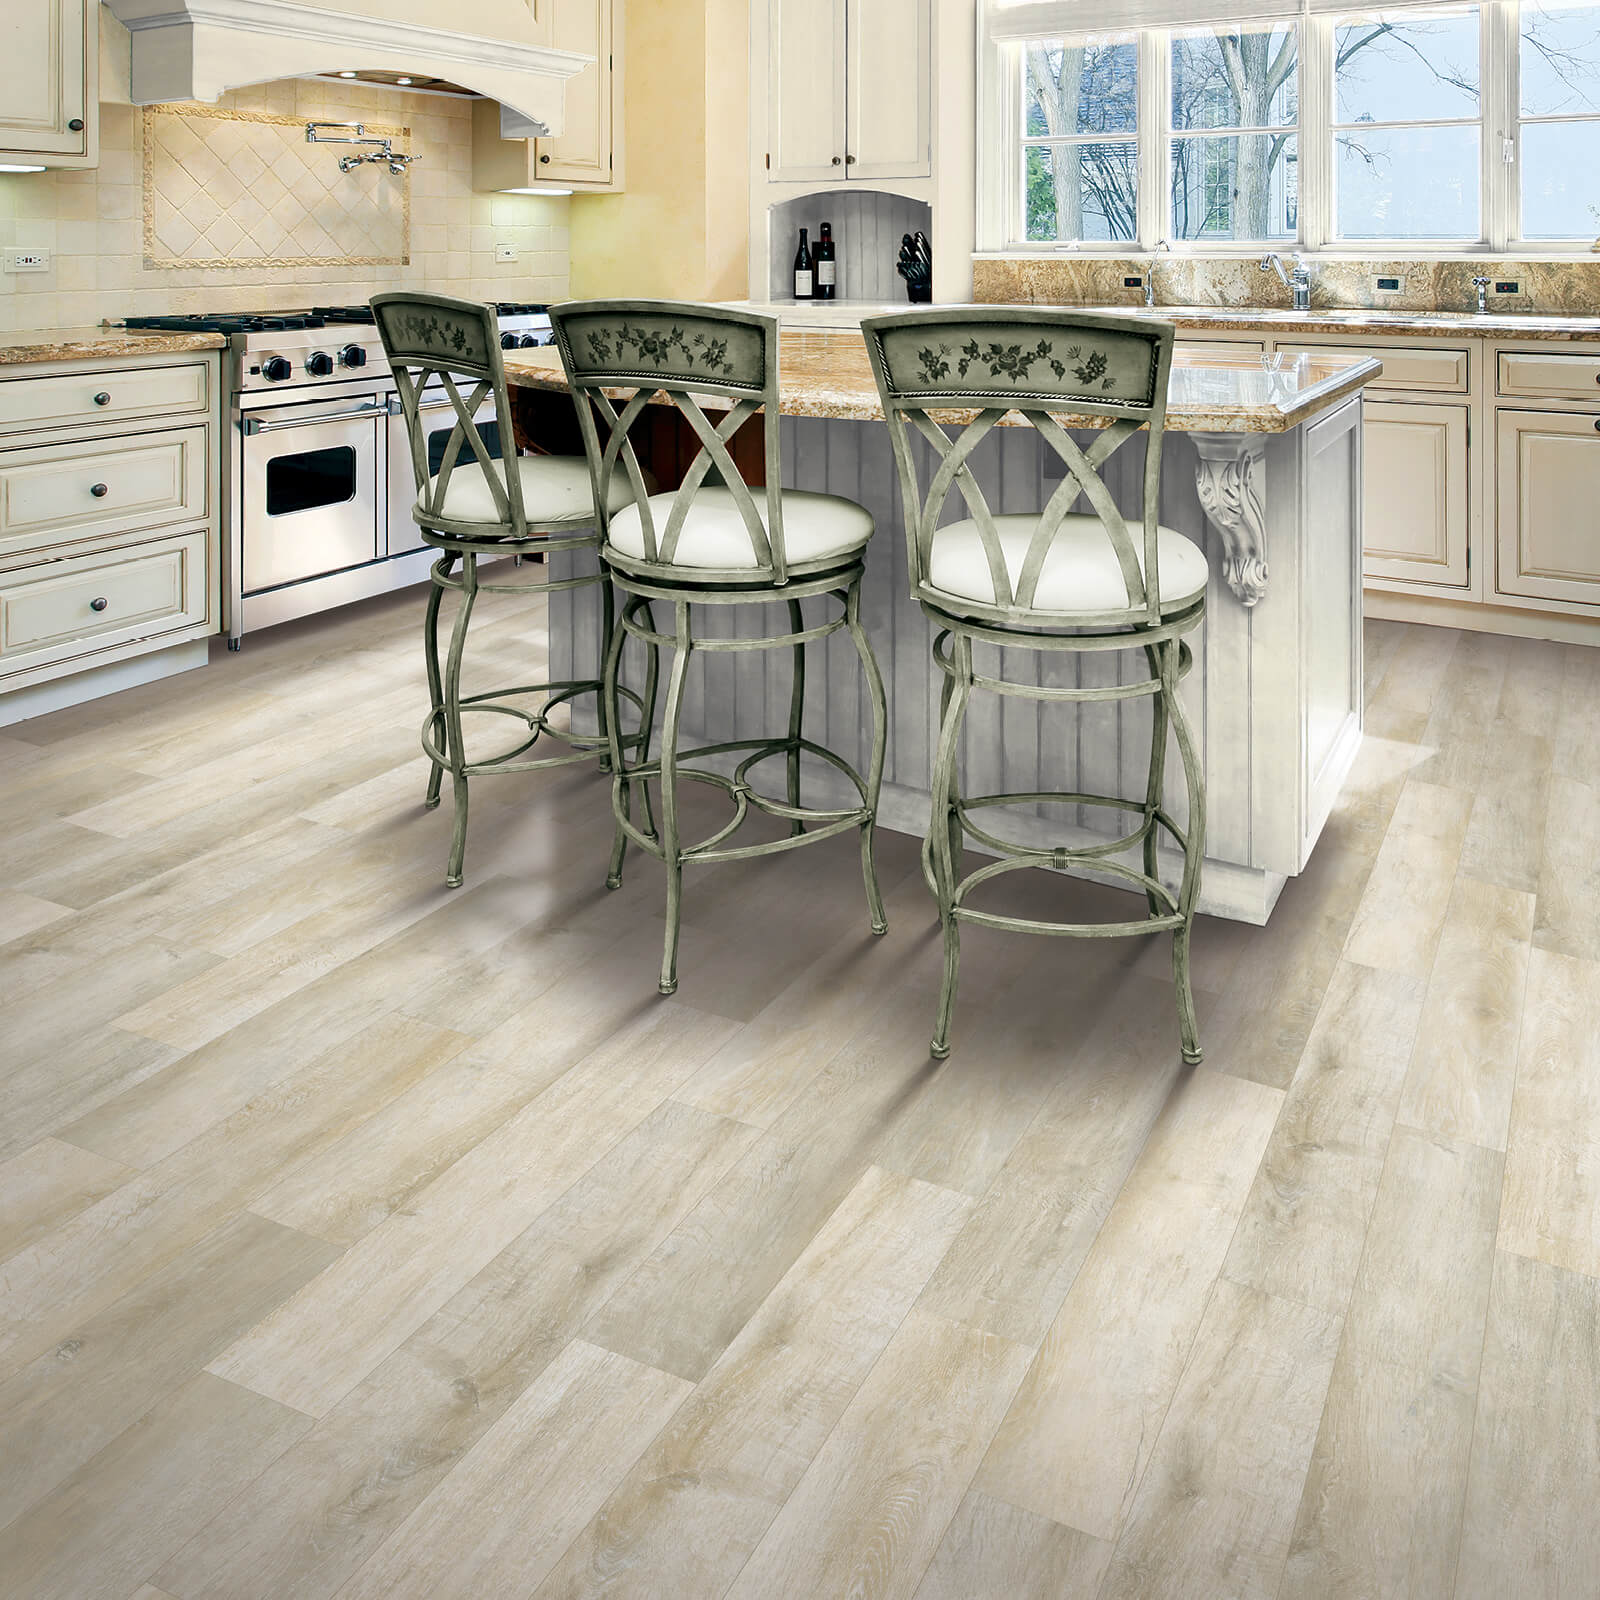 Hardwood flooring in kitchen | Haley's Flooring & Interiors